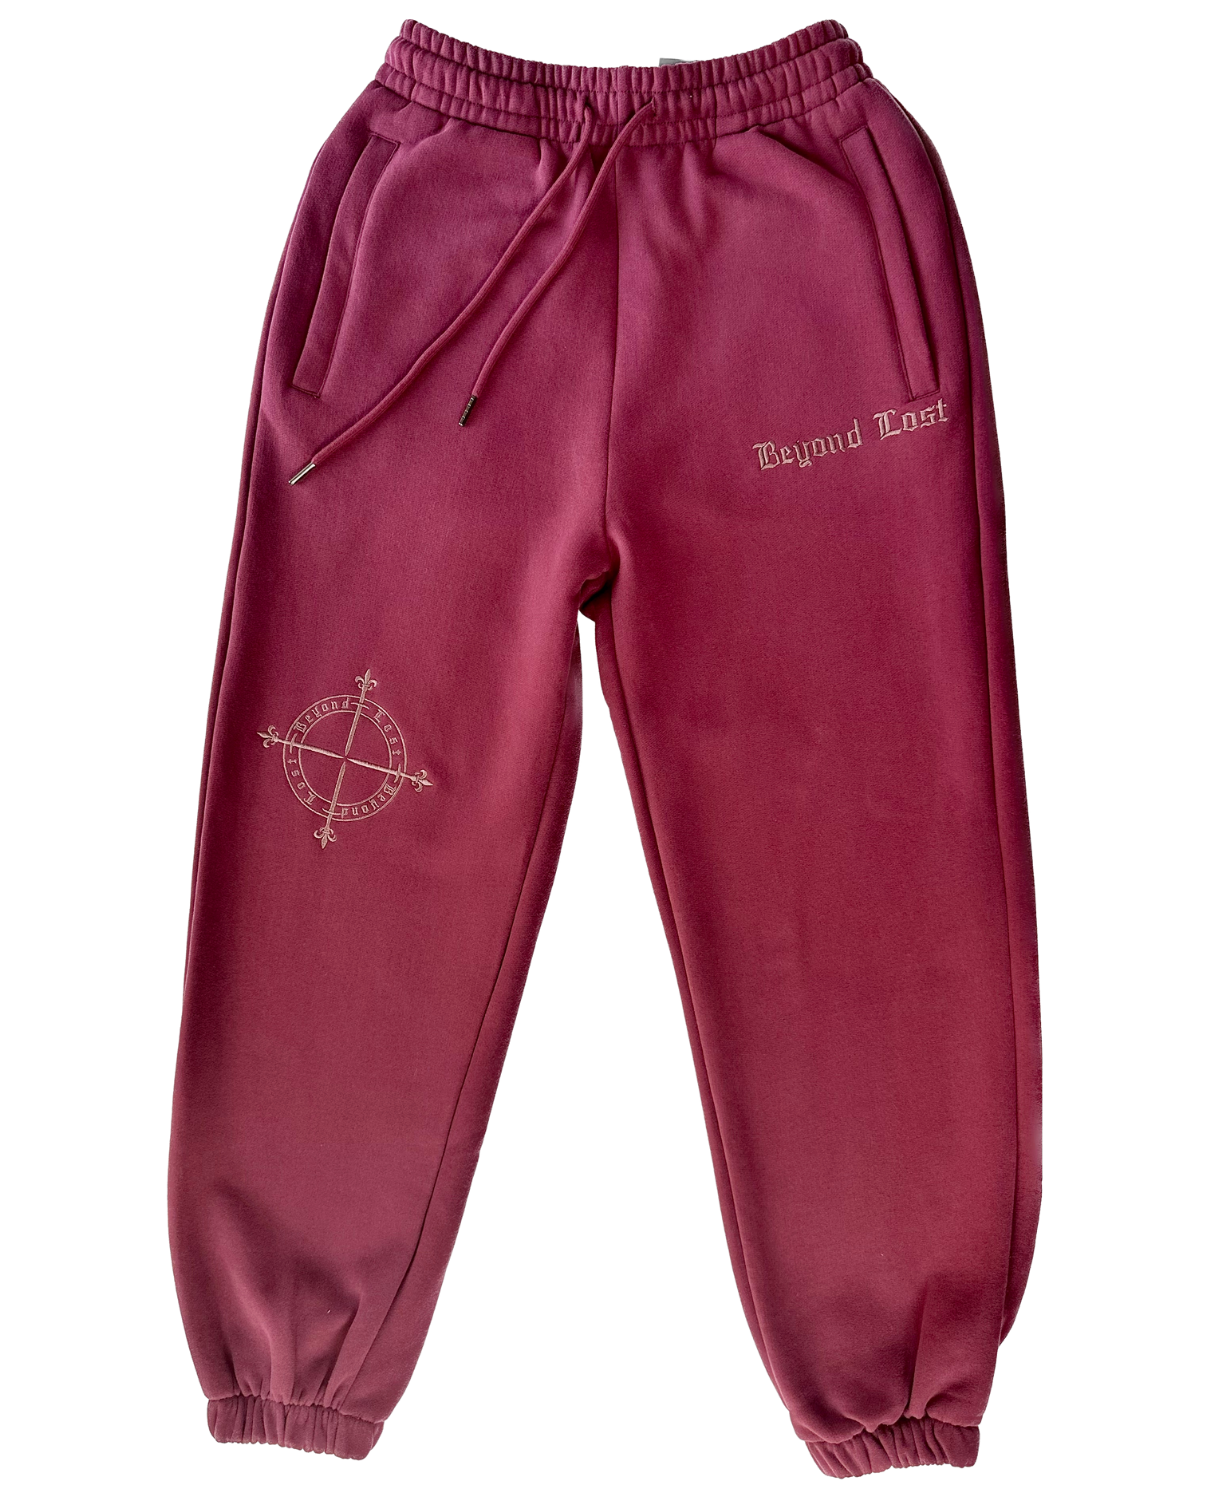 Berry Sweatpants: Light Berry Embroidery, 3 Zip Pockets/Unisex